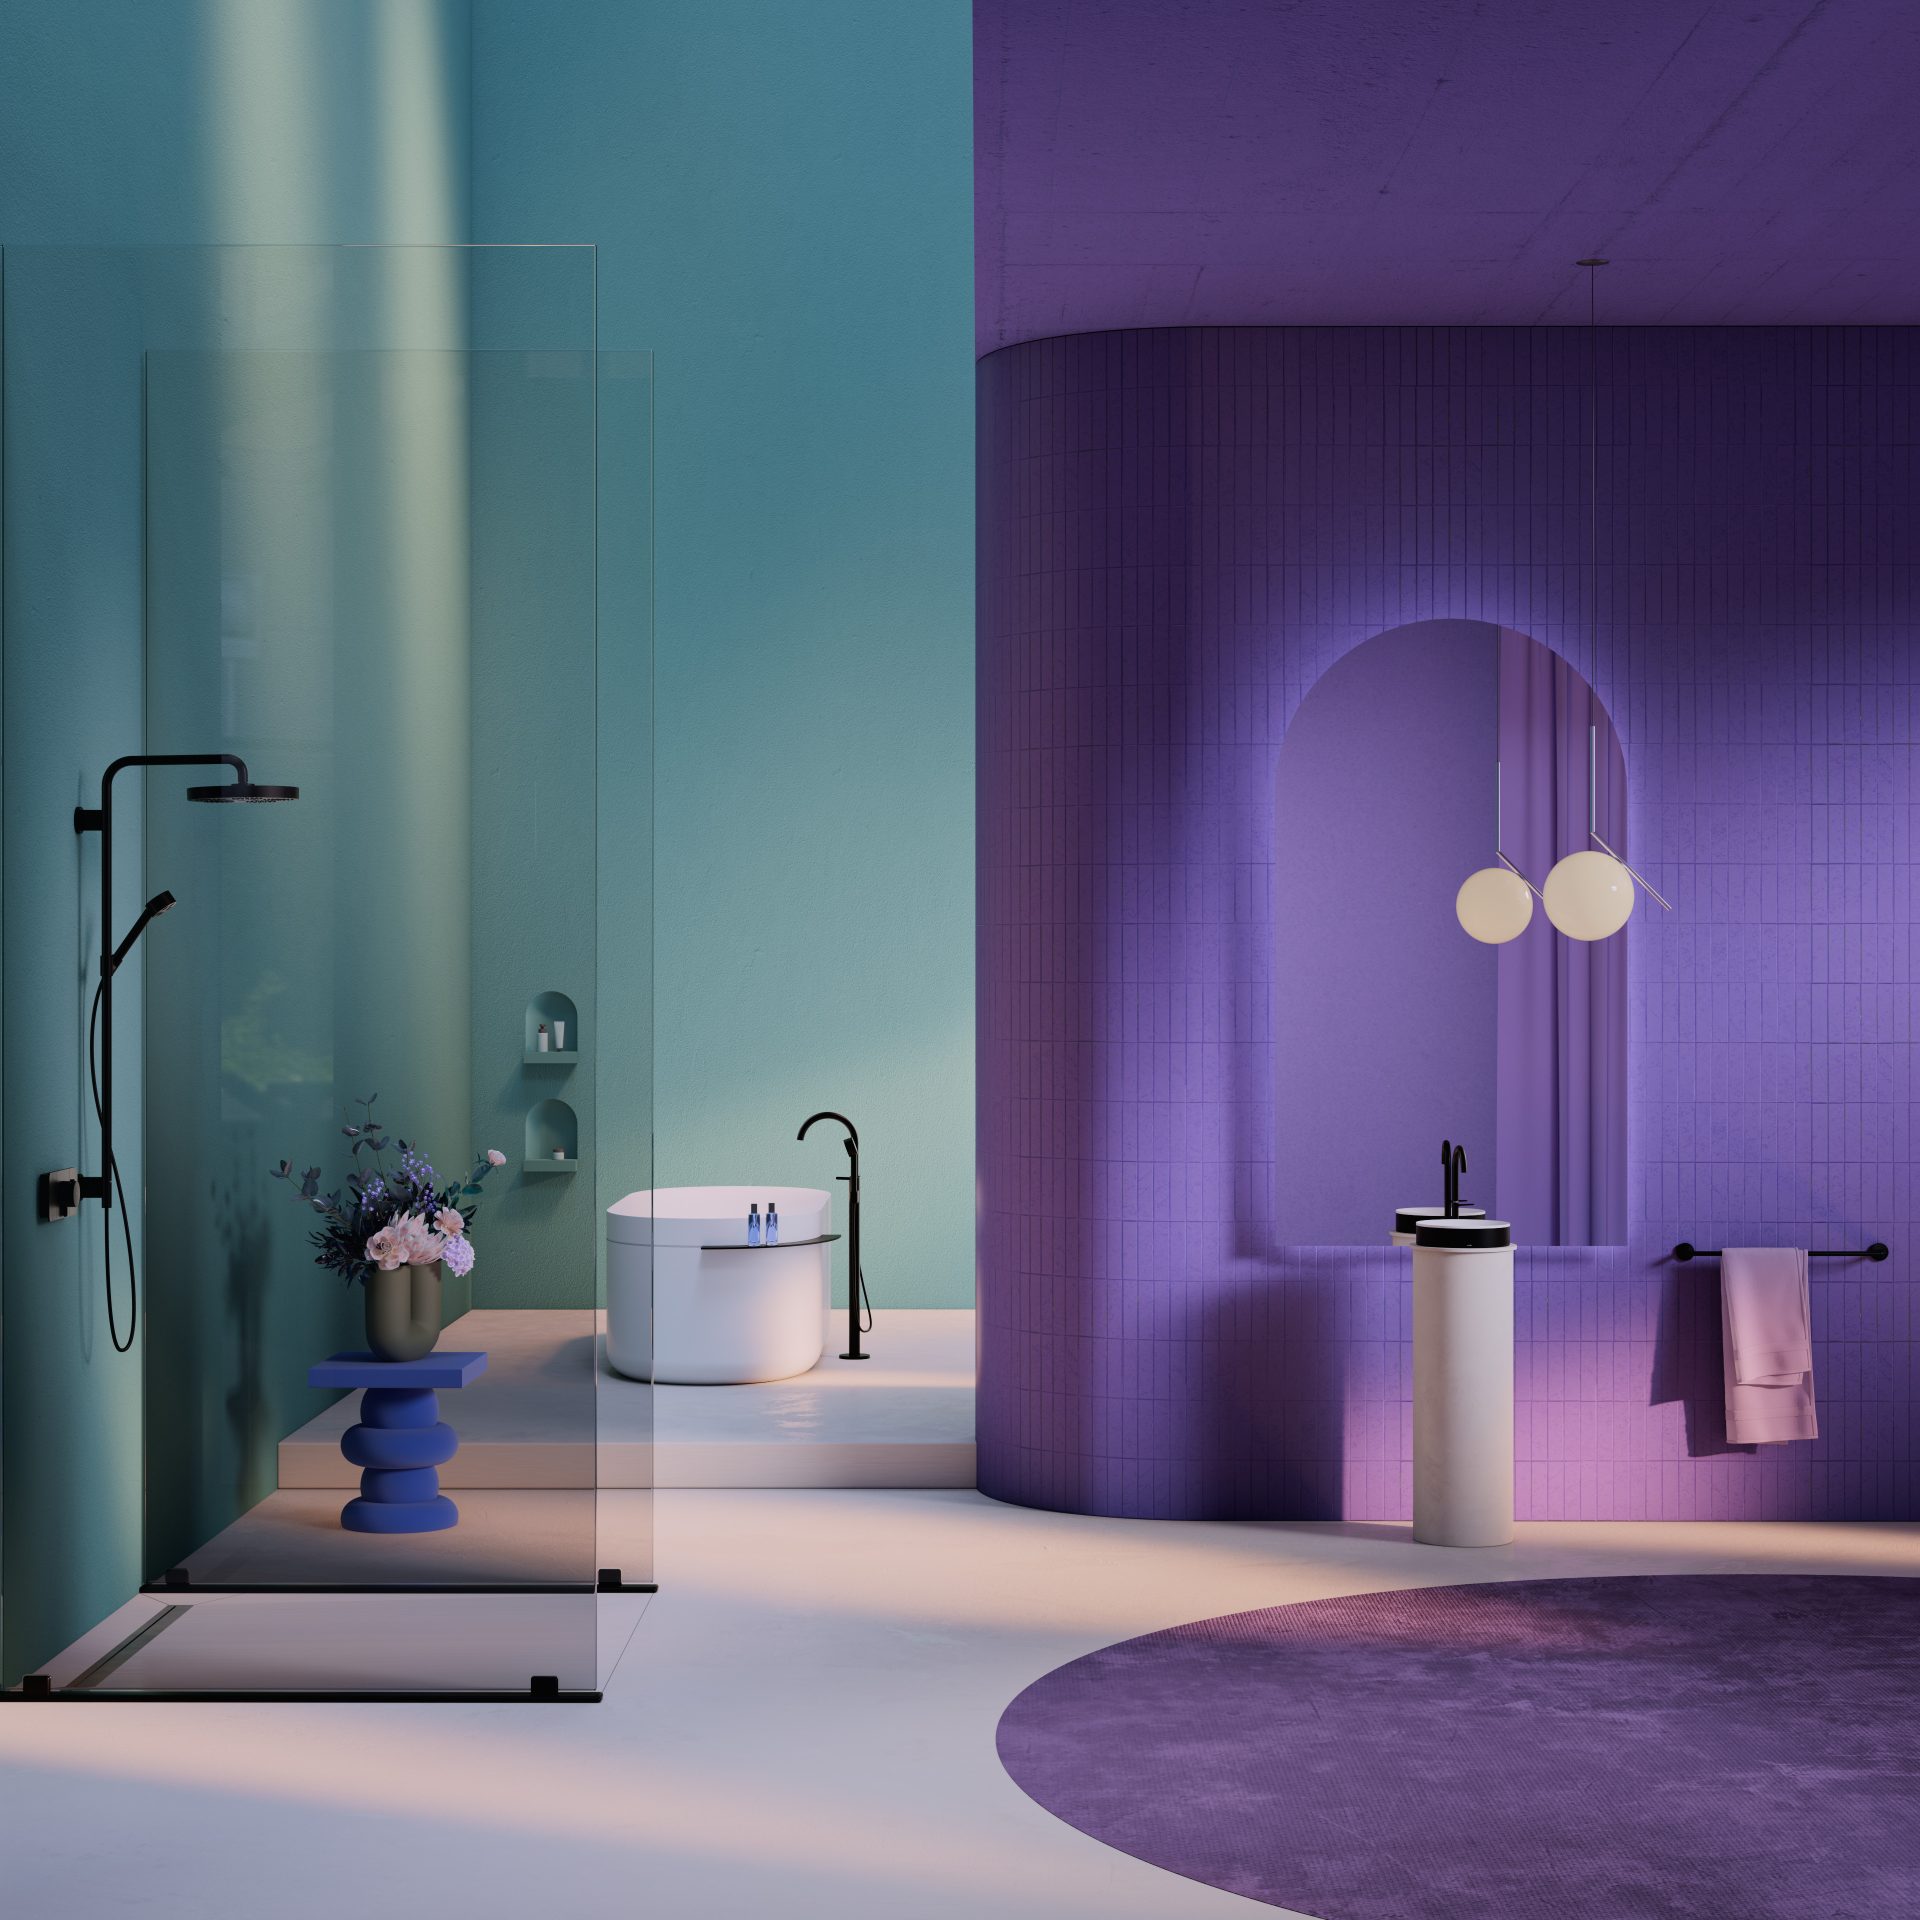 Smart Bathroom Technology: Embracing the Future